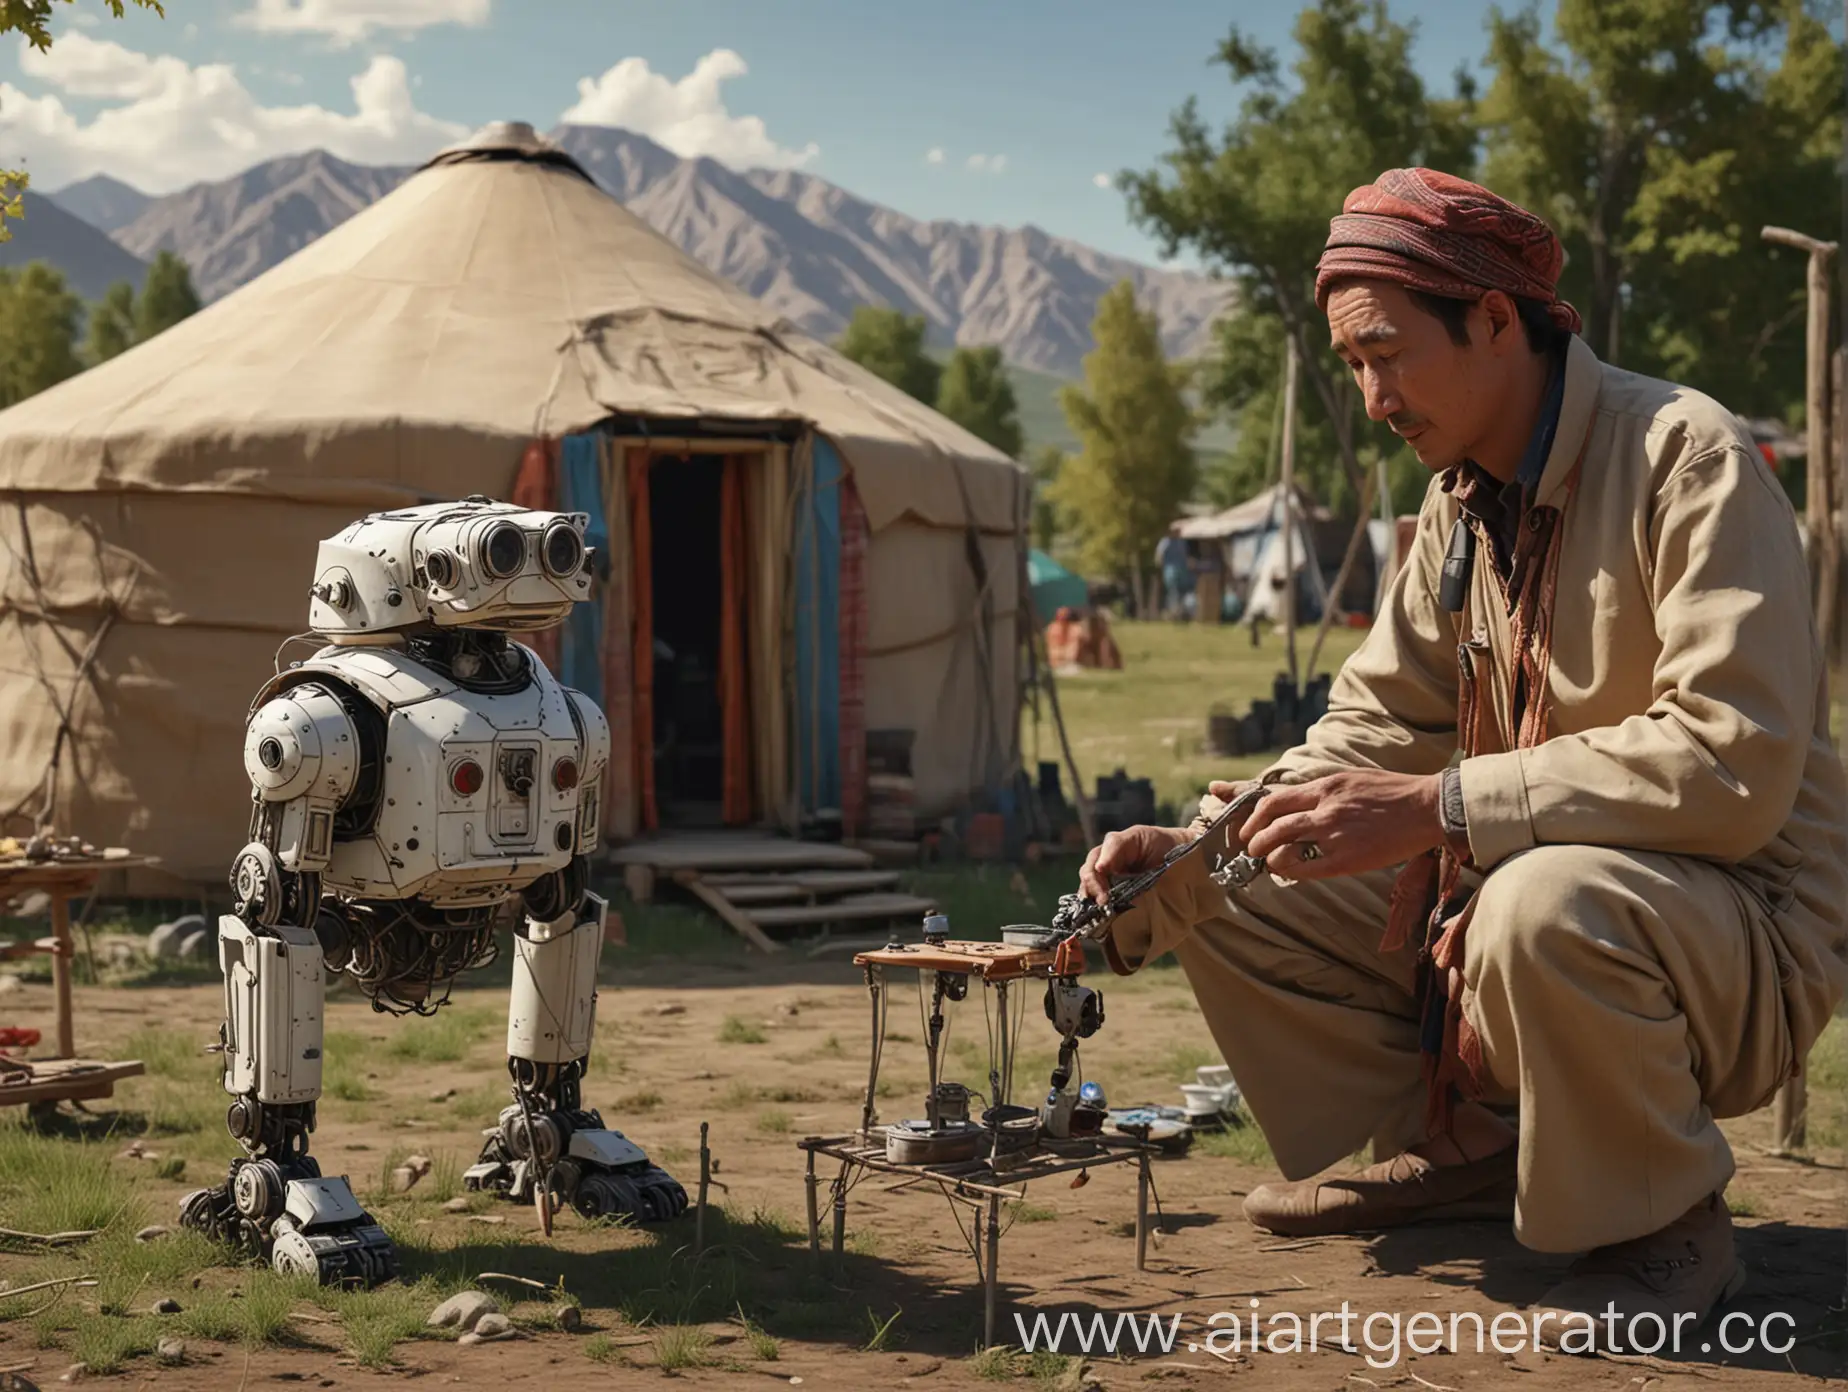 Kazakh-Teacher-Crafting-Realistic-Robots-in-Traditional-Yurt-Setting